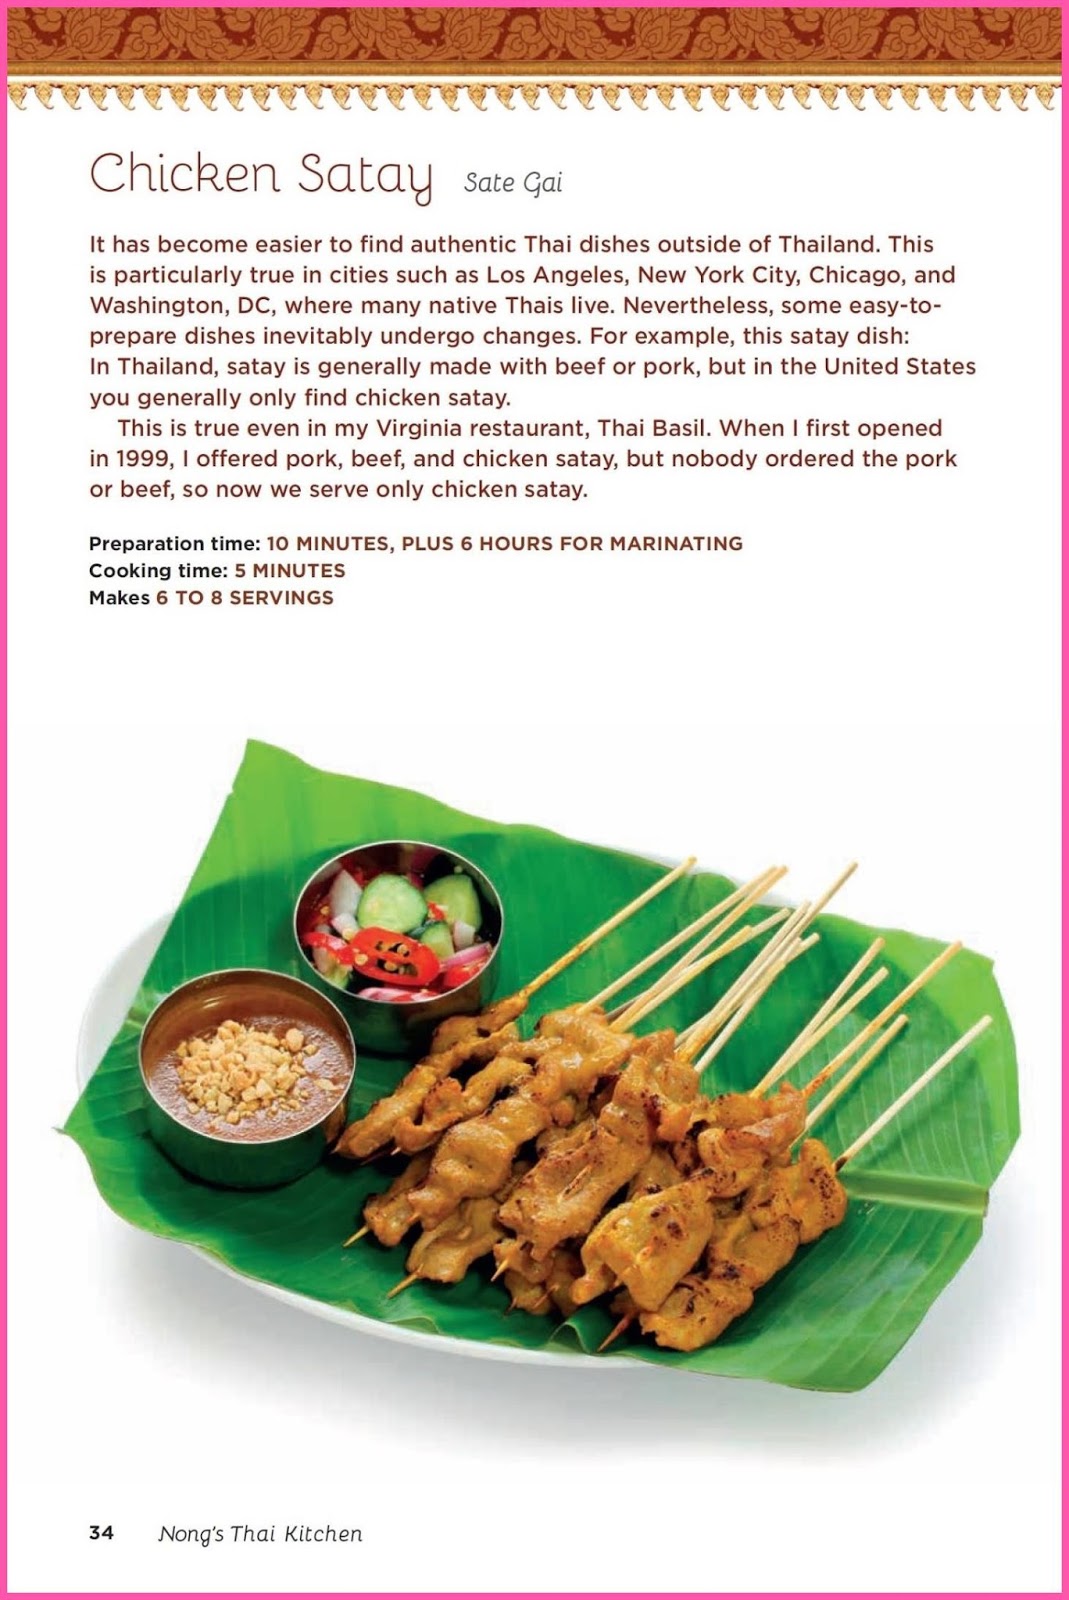 19 Thai Simple Kitchen Hong Kong Nong's Thai Kitchen Clic Recipes that are Quick Healthy  Thai,Simple,Kitchen,Hong,Kong